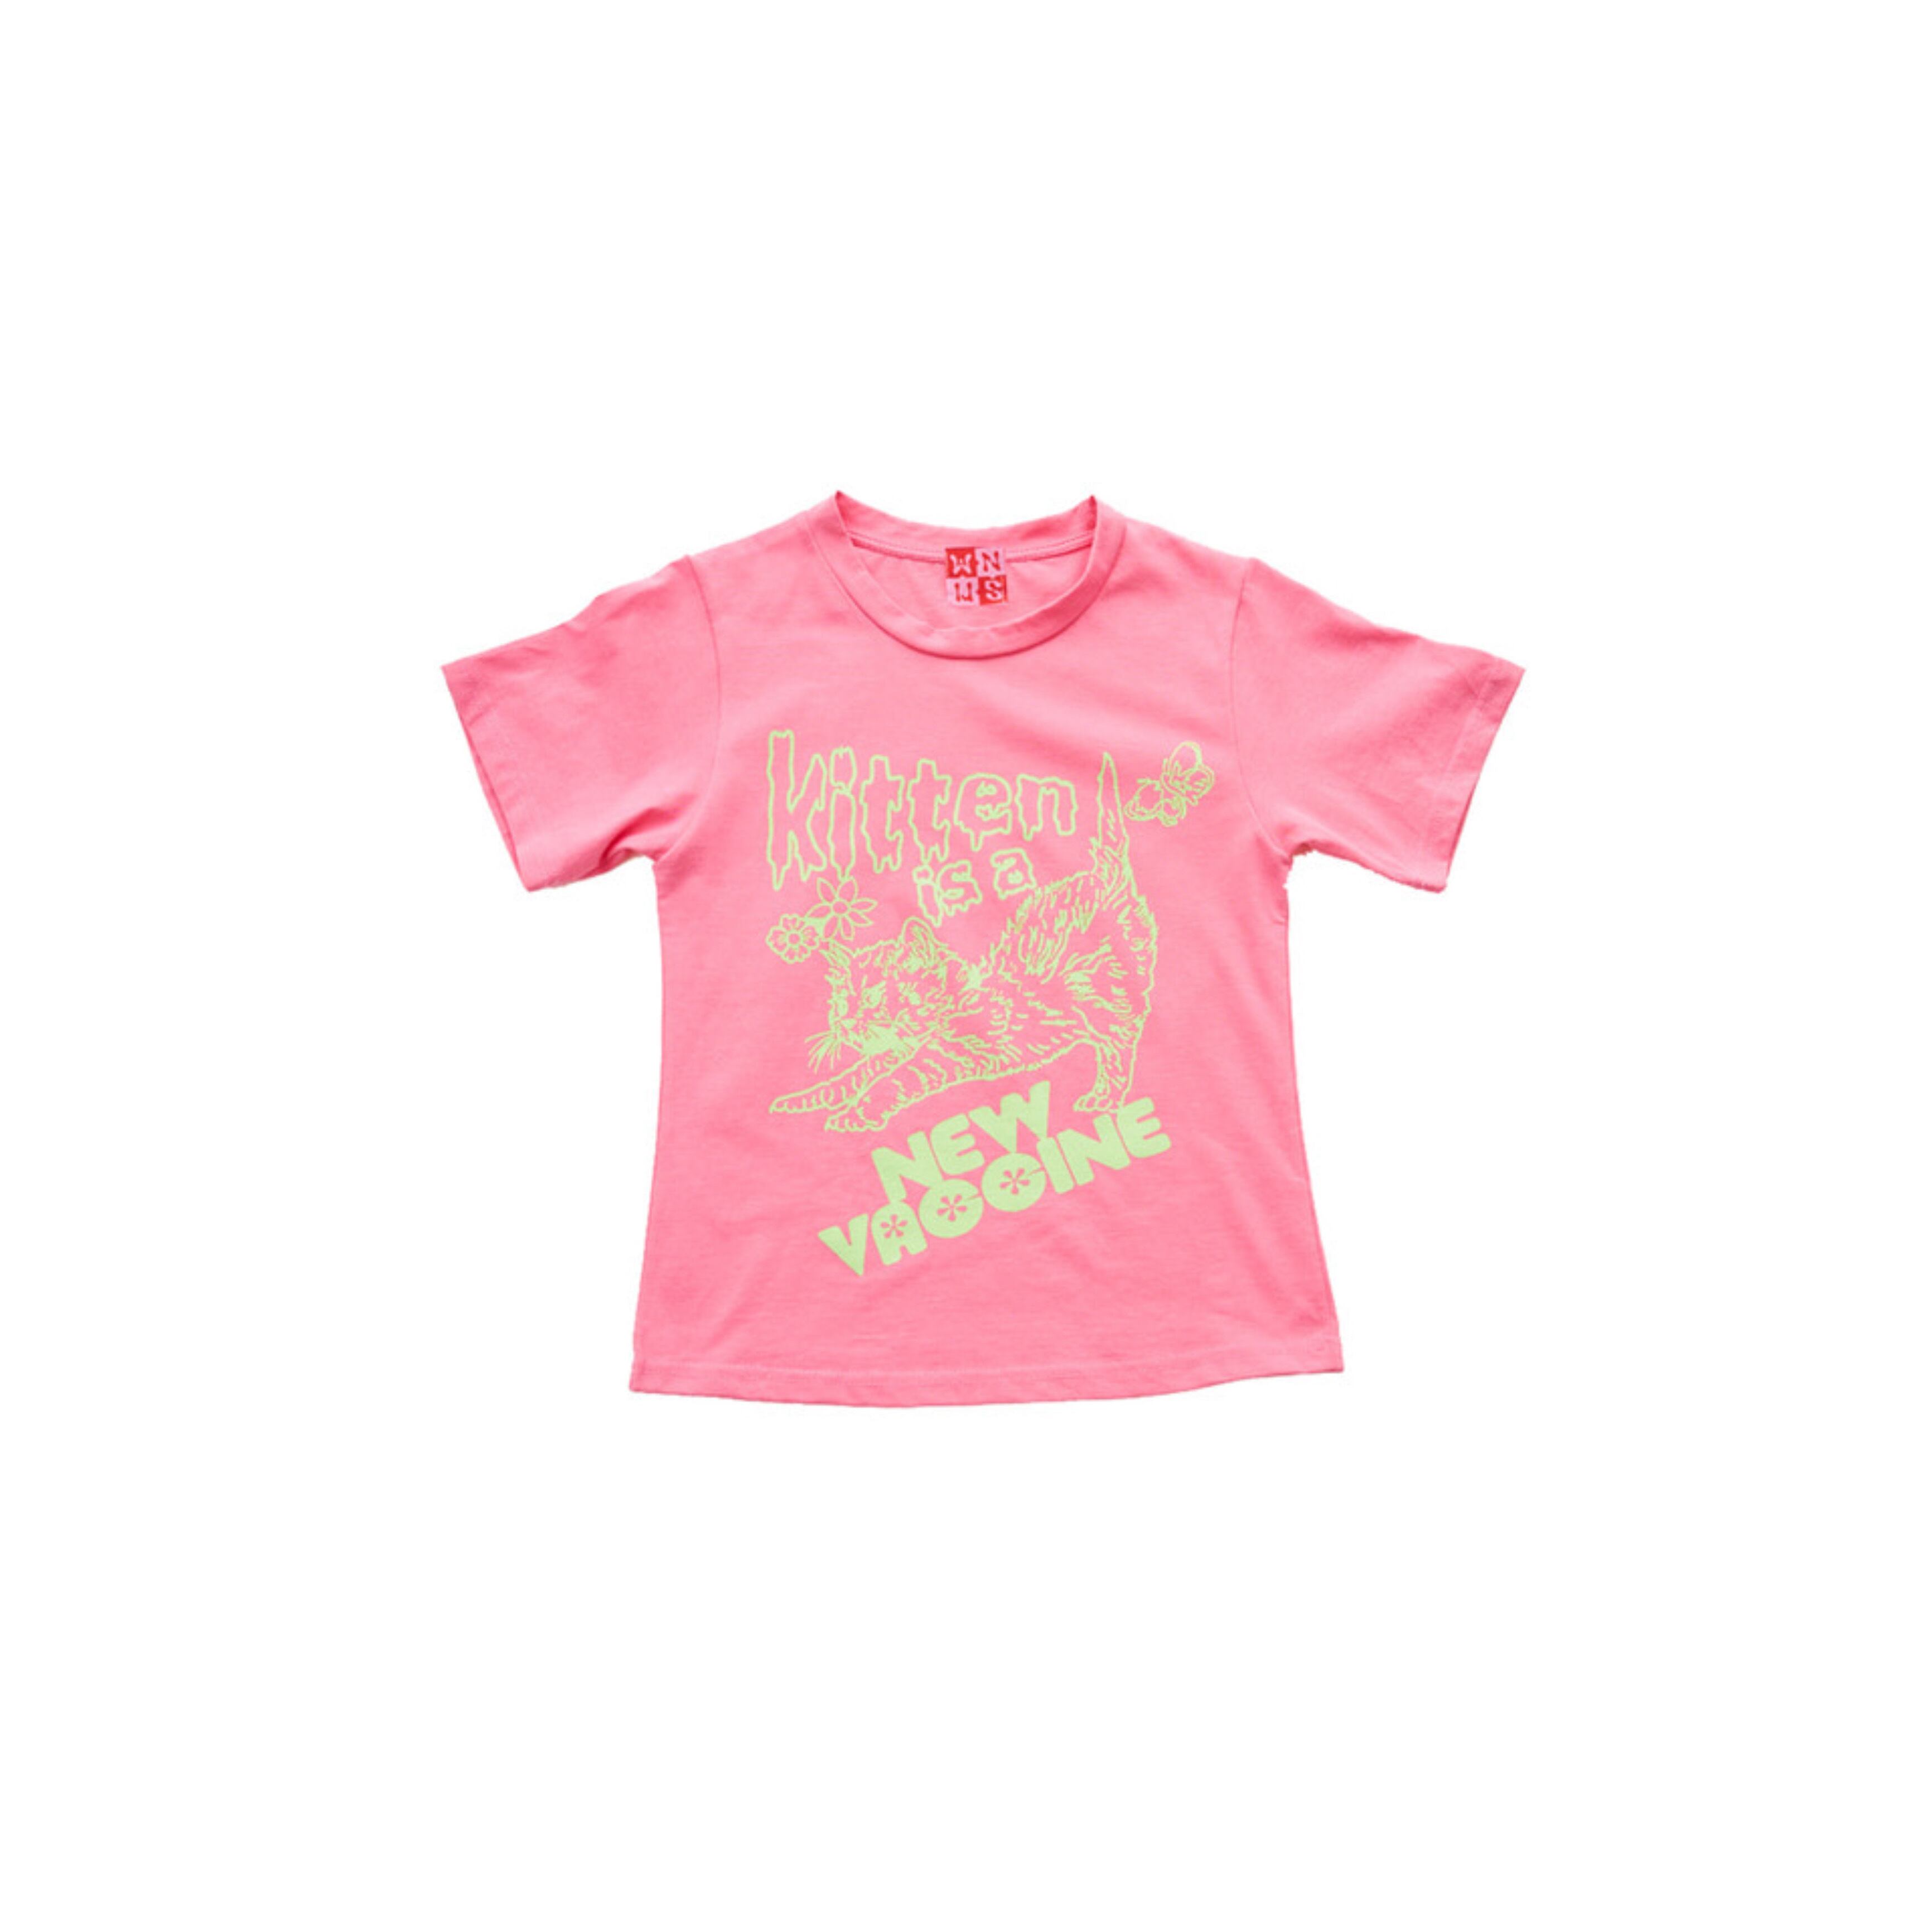 [WHYNOTUS] kitten tee - pink 正規品 韓国ブランド 韓国代行 韓国ファッション 韓国通販 Tシャツ | BONZ  (韓国ブランド 代行) powered by BASE